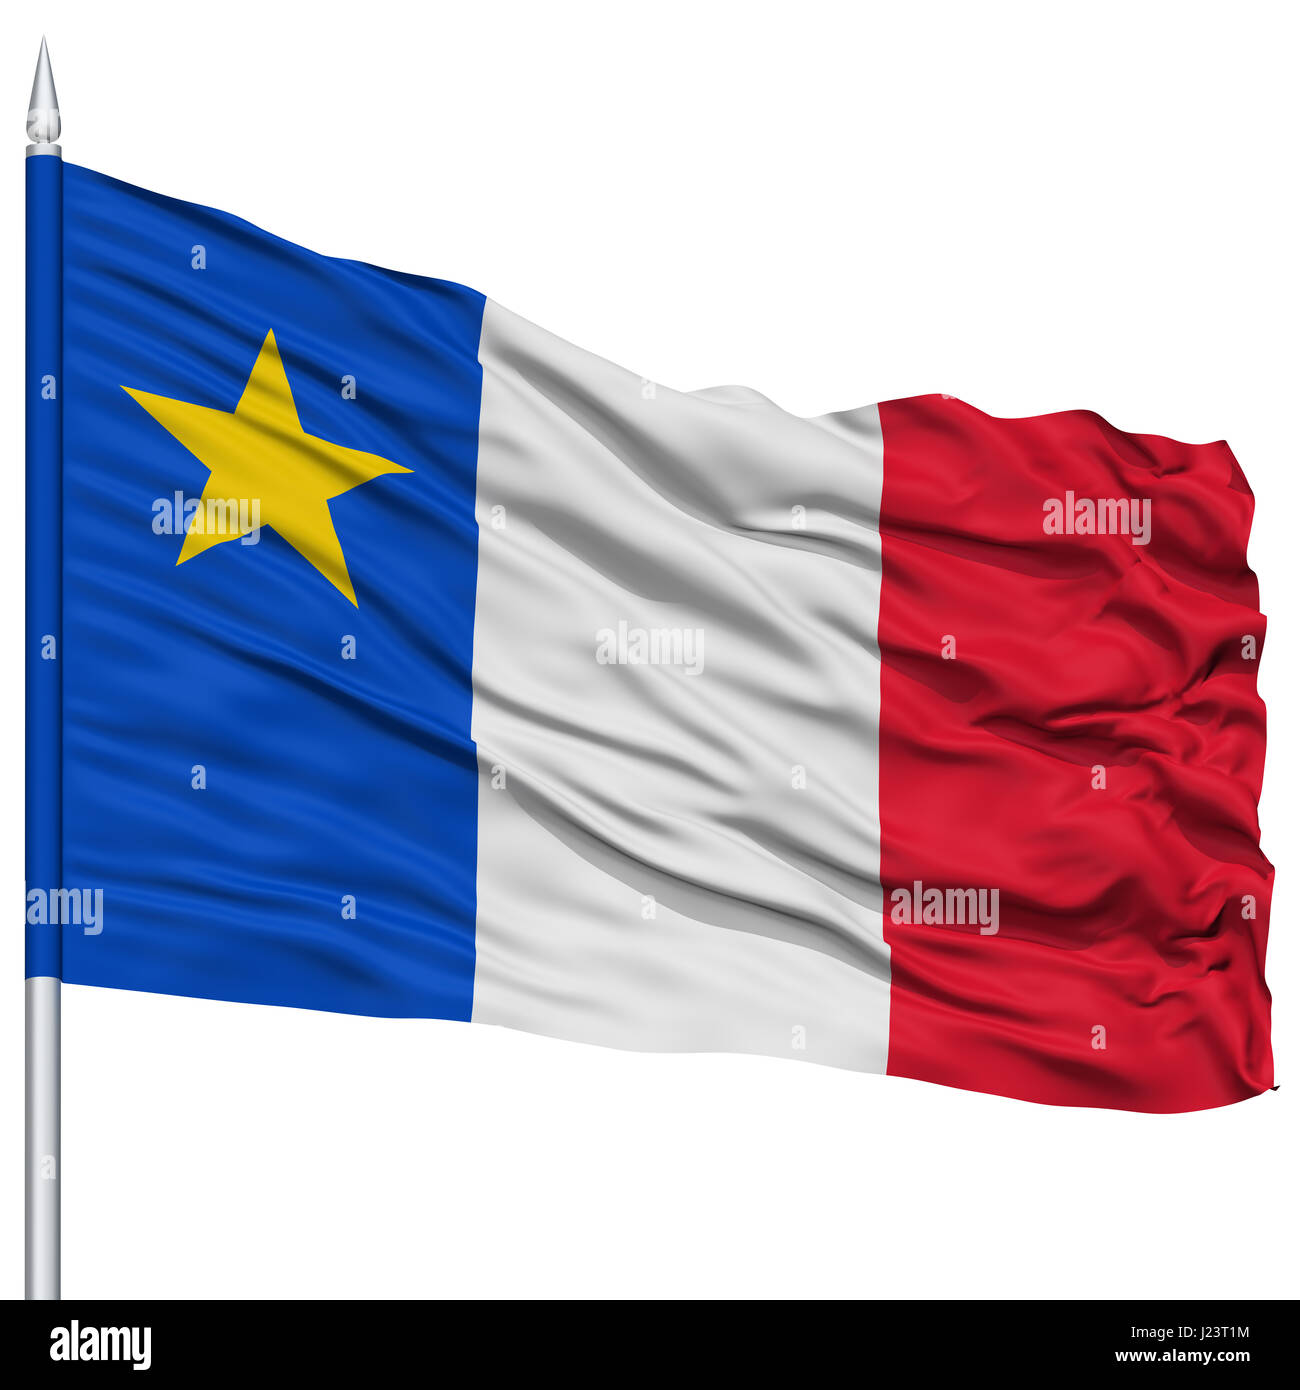 Acadia Madawaska City Flag on Flagpole, Maine State, Flying in the Wind, Isolated on White Background Stock Photo